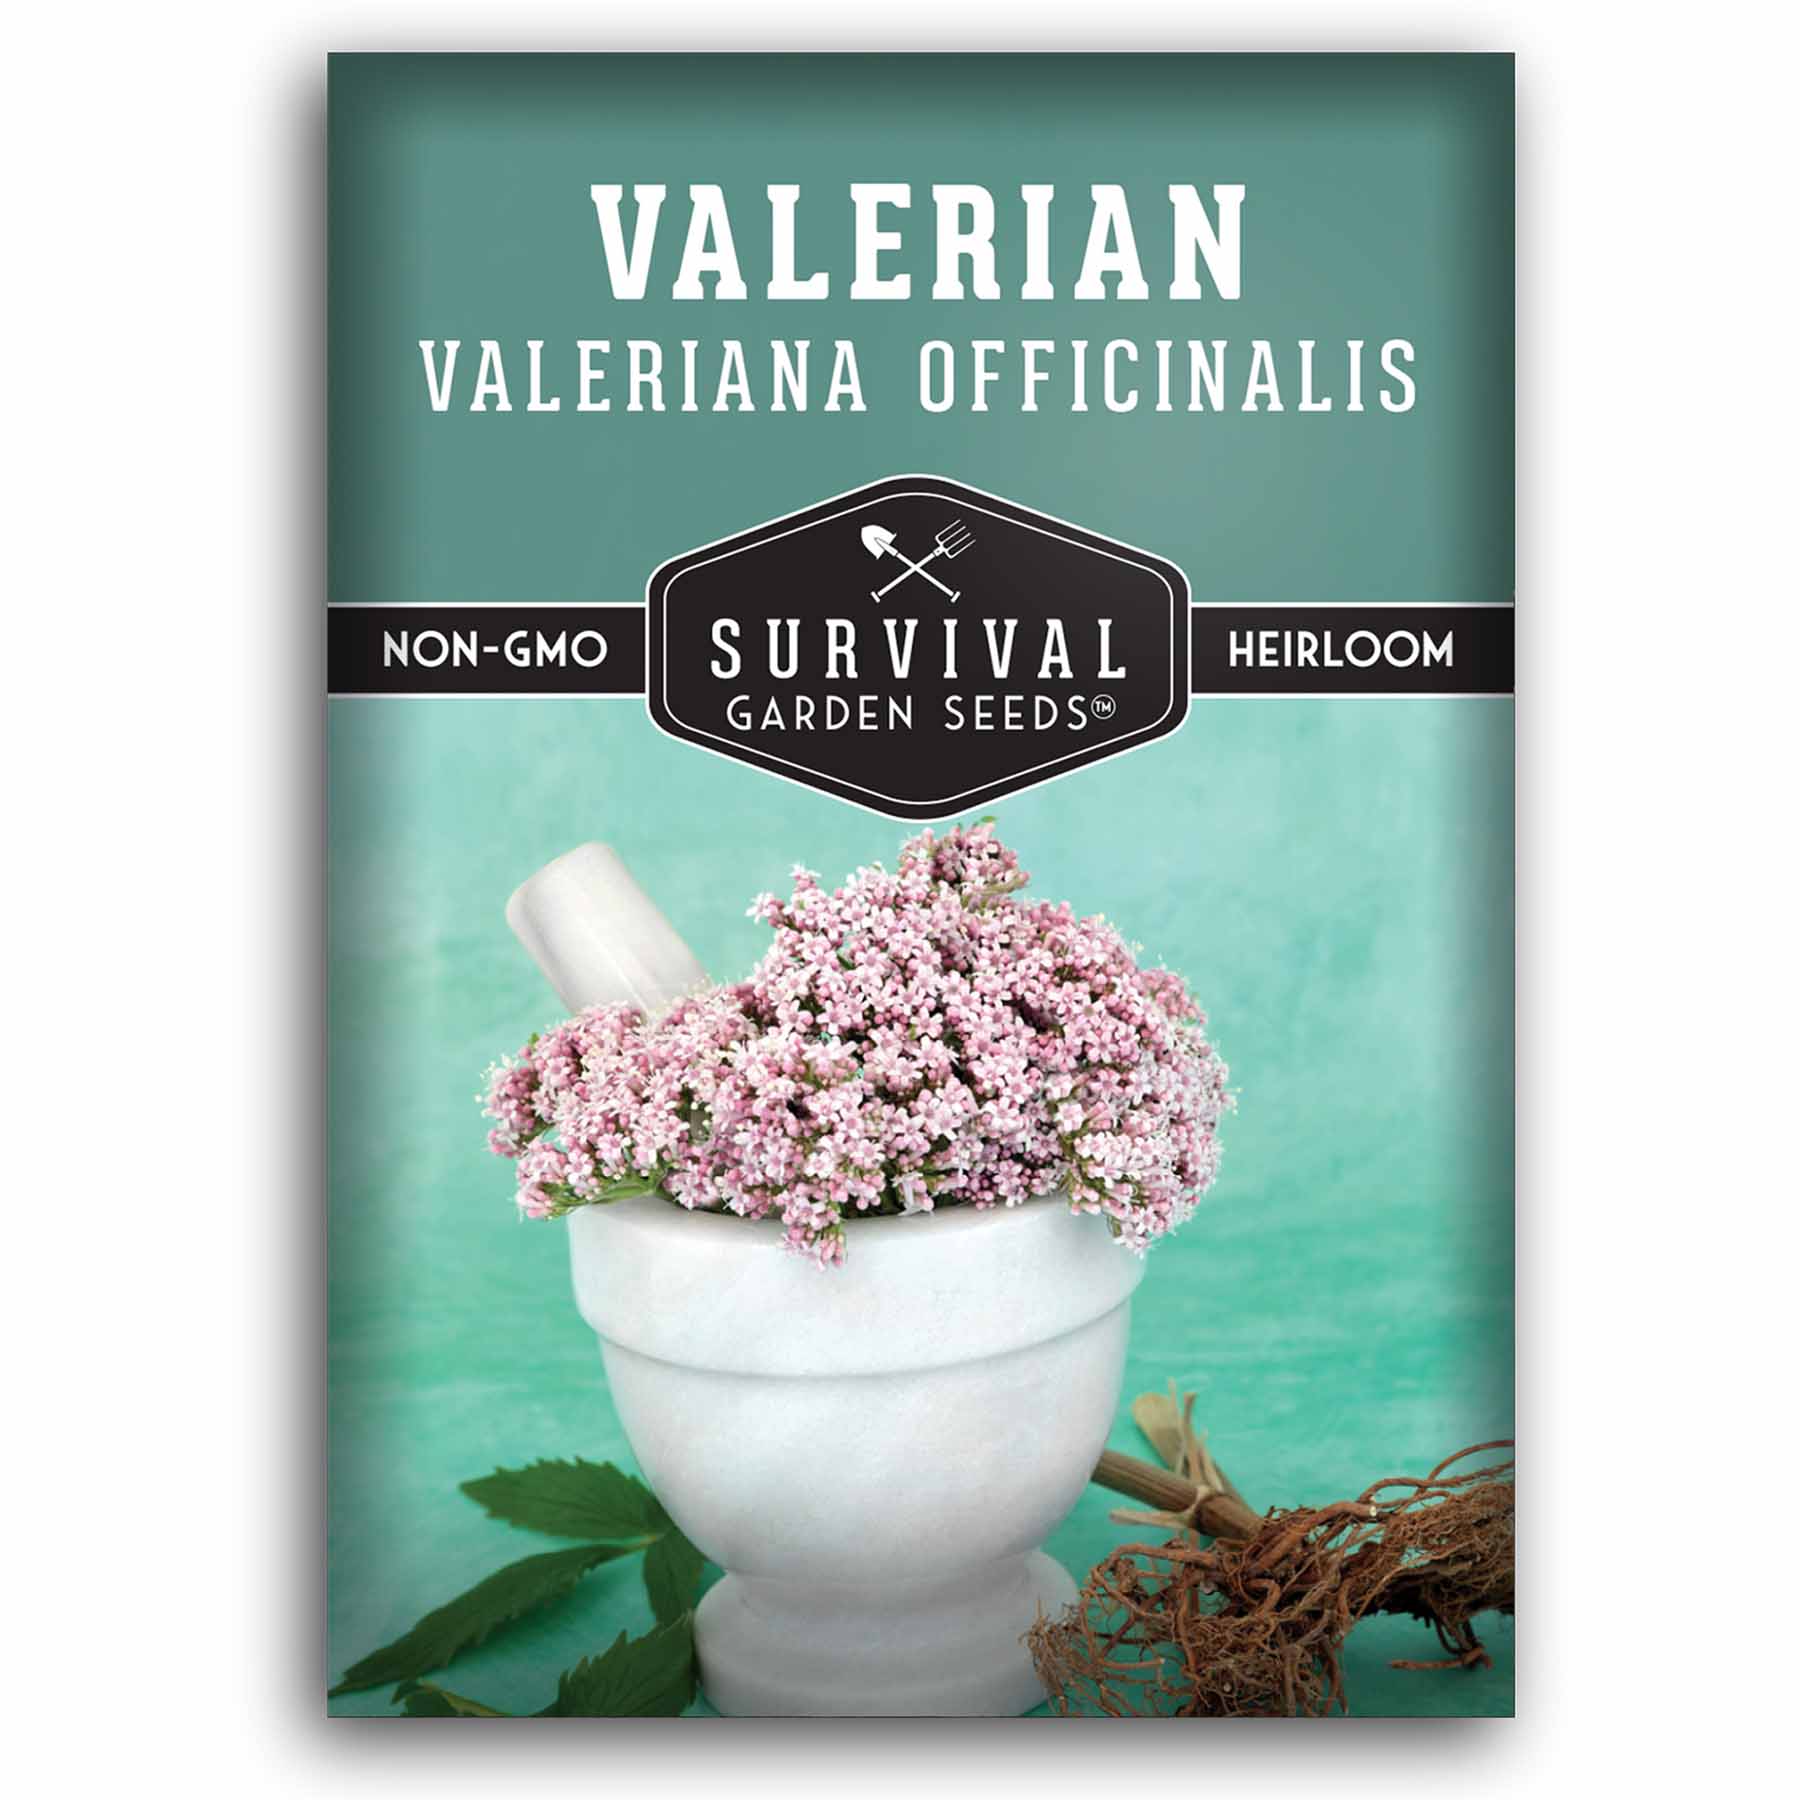 1 packet of Valerian seeds